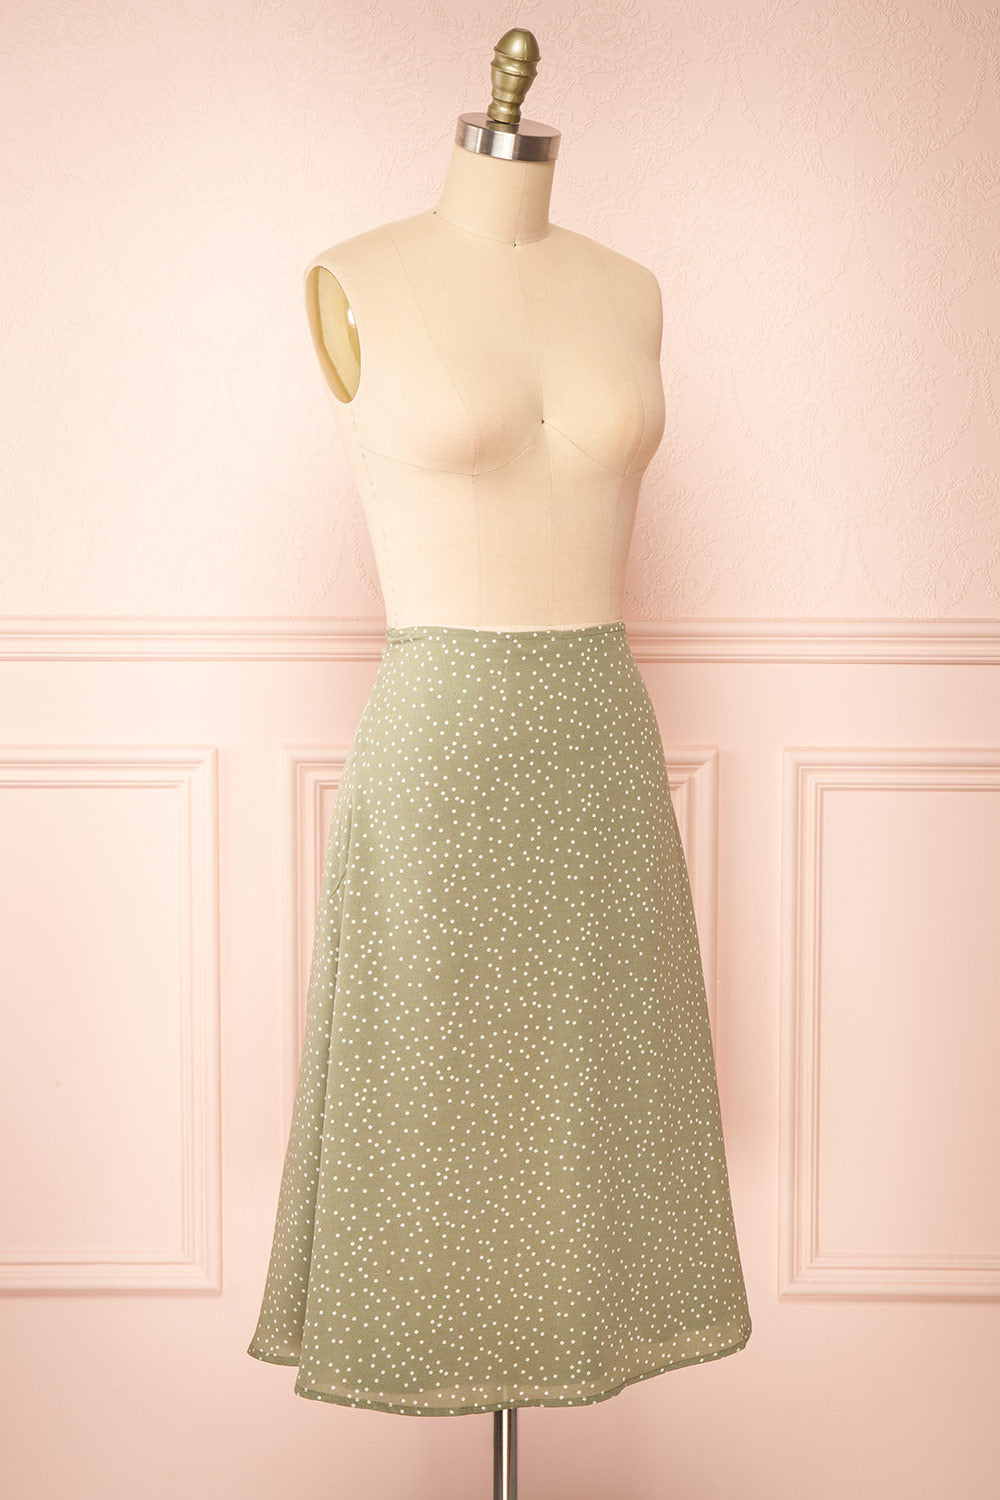 Yure Polka Dot Green A-line Midi Skirt | Boutique 1861 side view